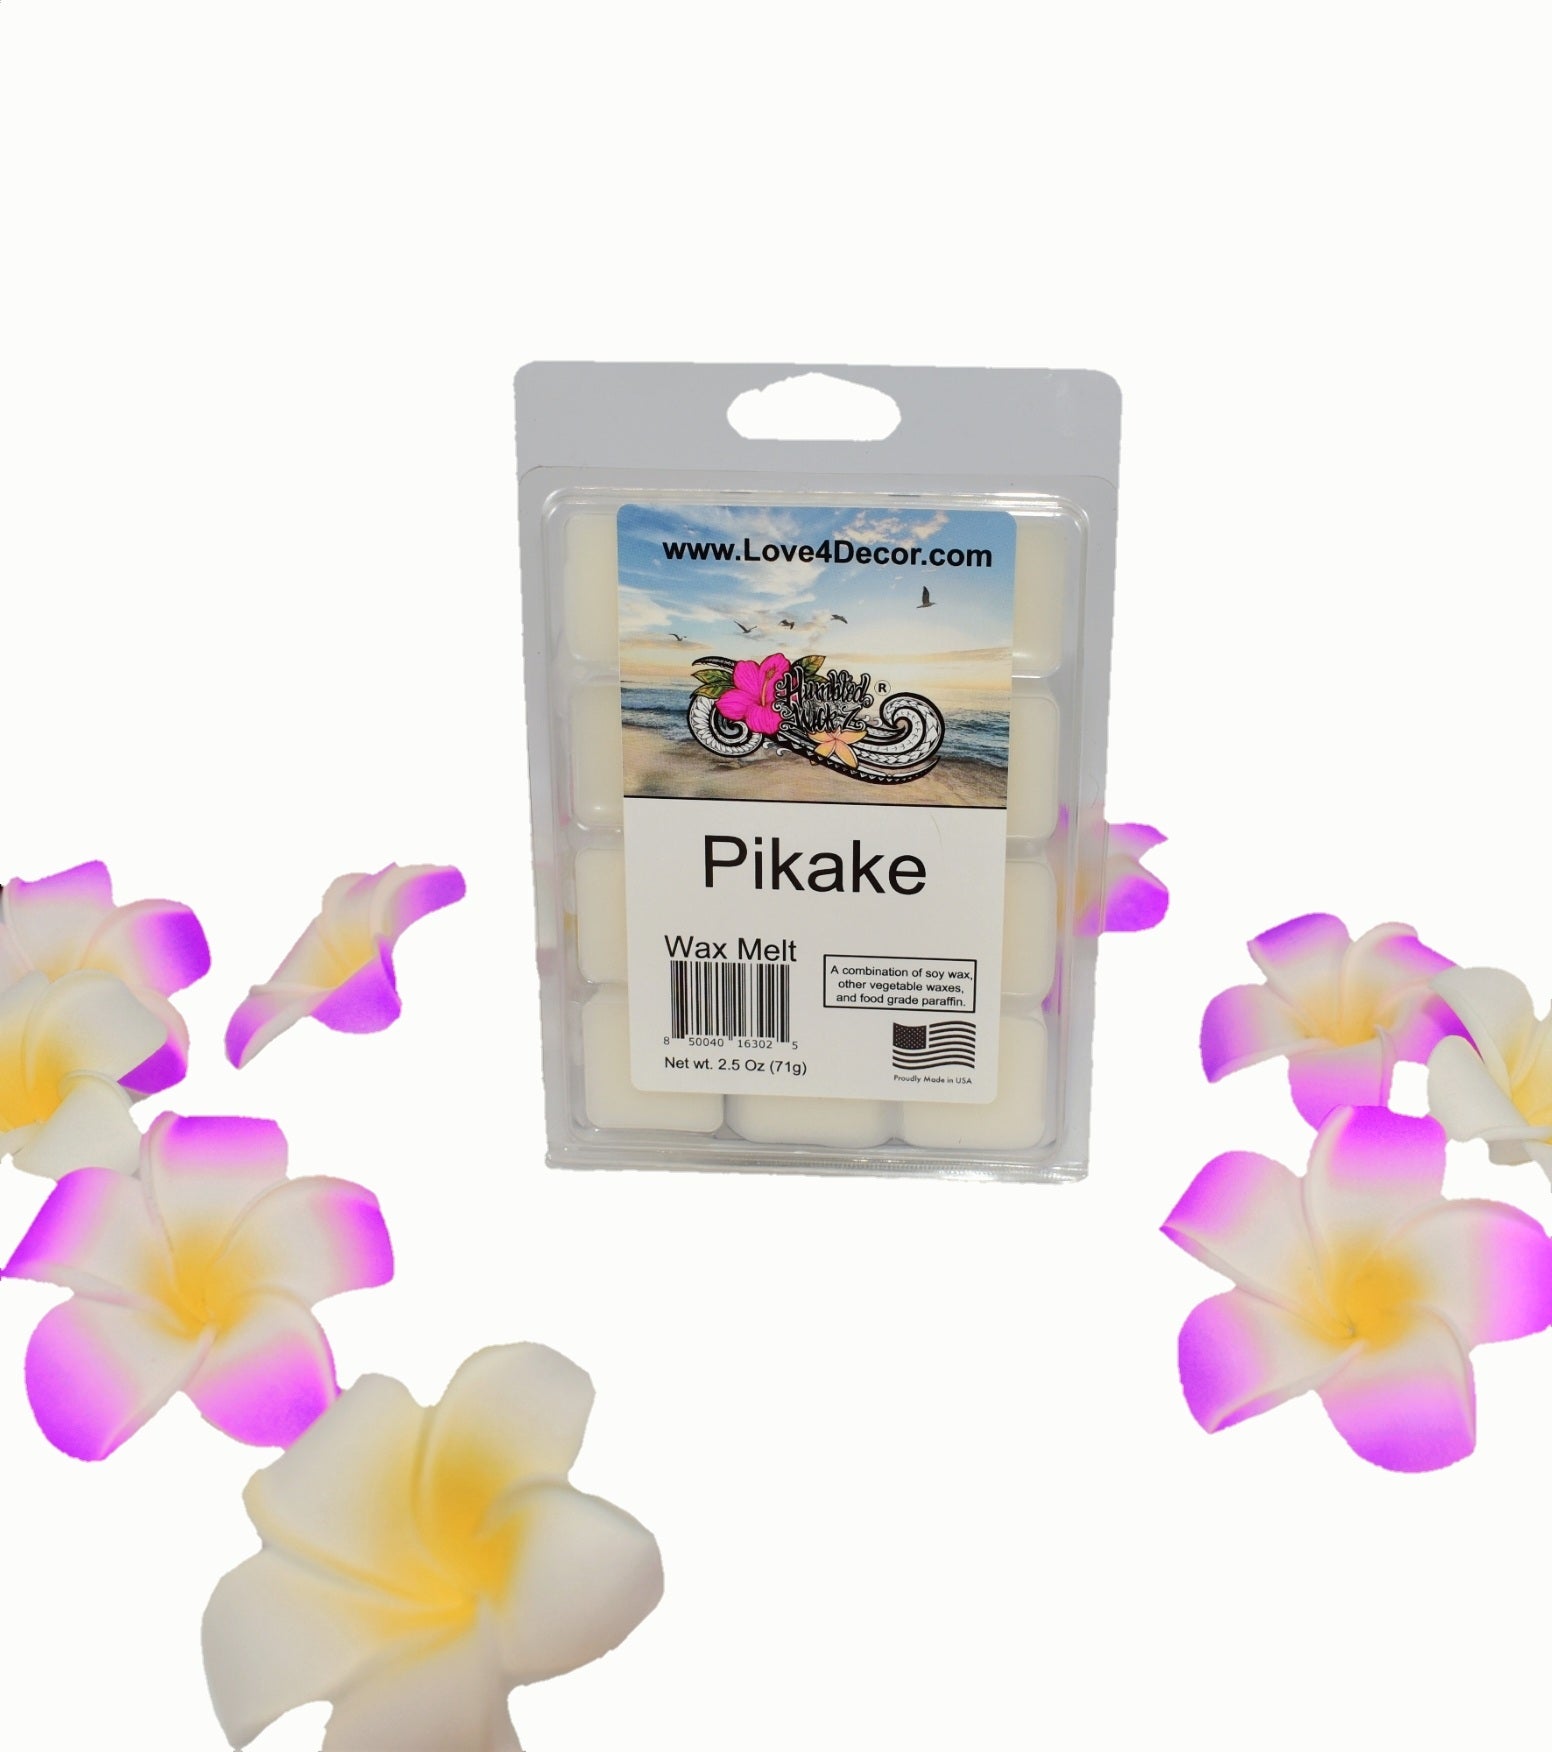 The Pikake Scent